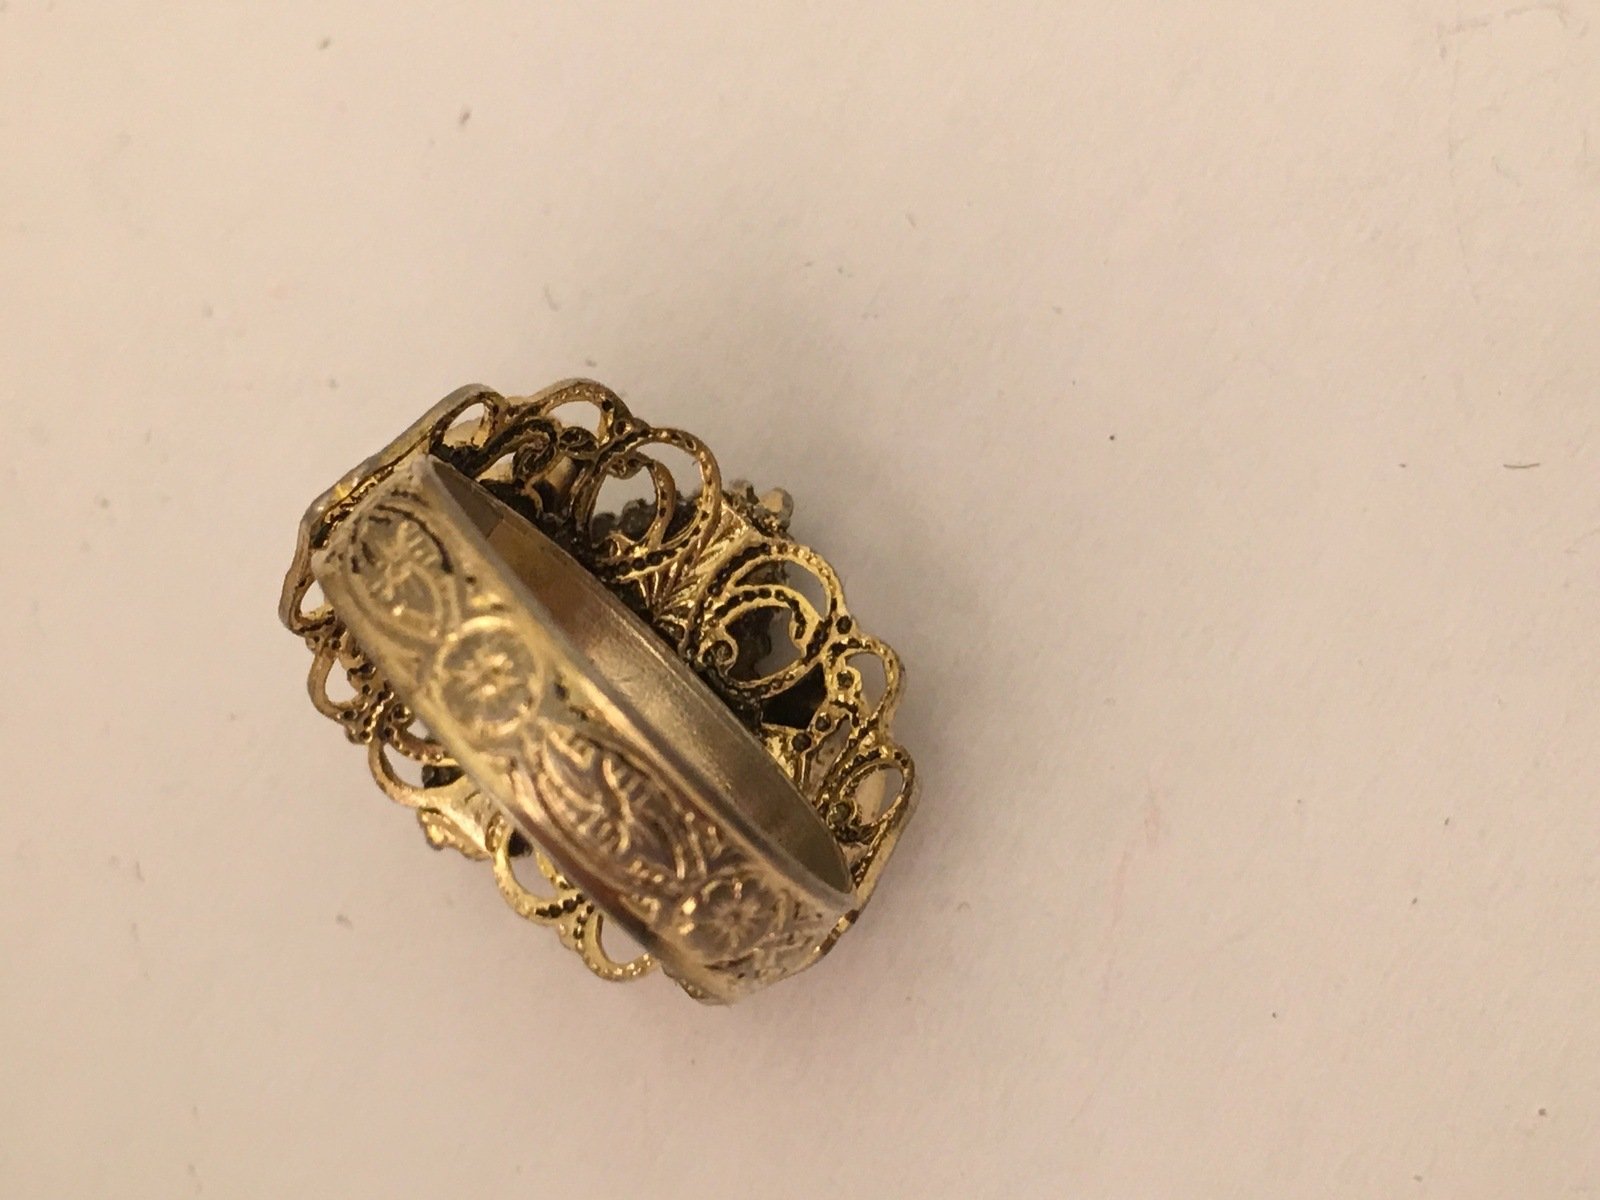 Vintage Gold Green Cocktail Ring